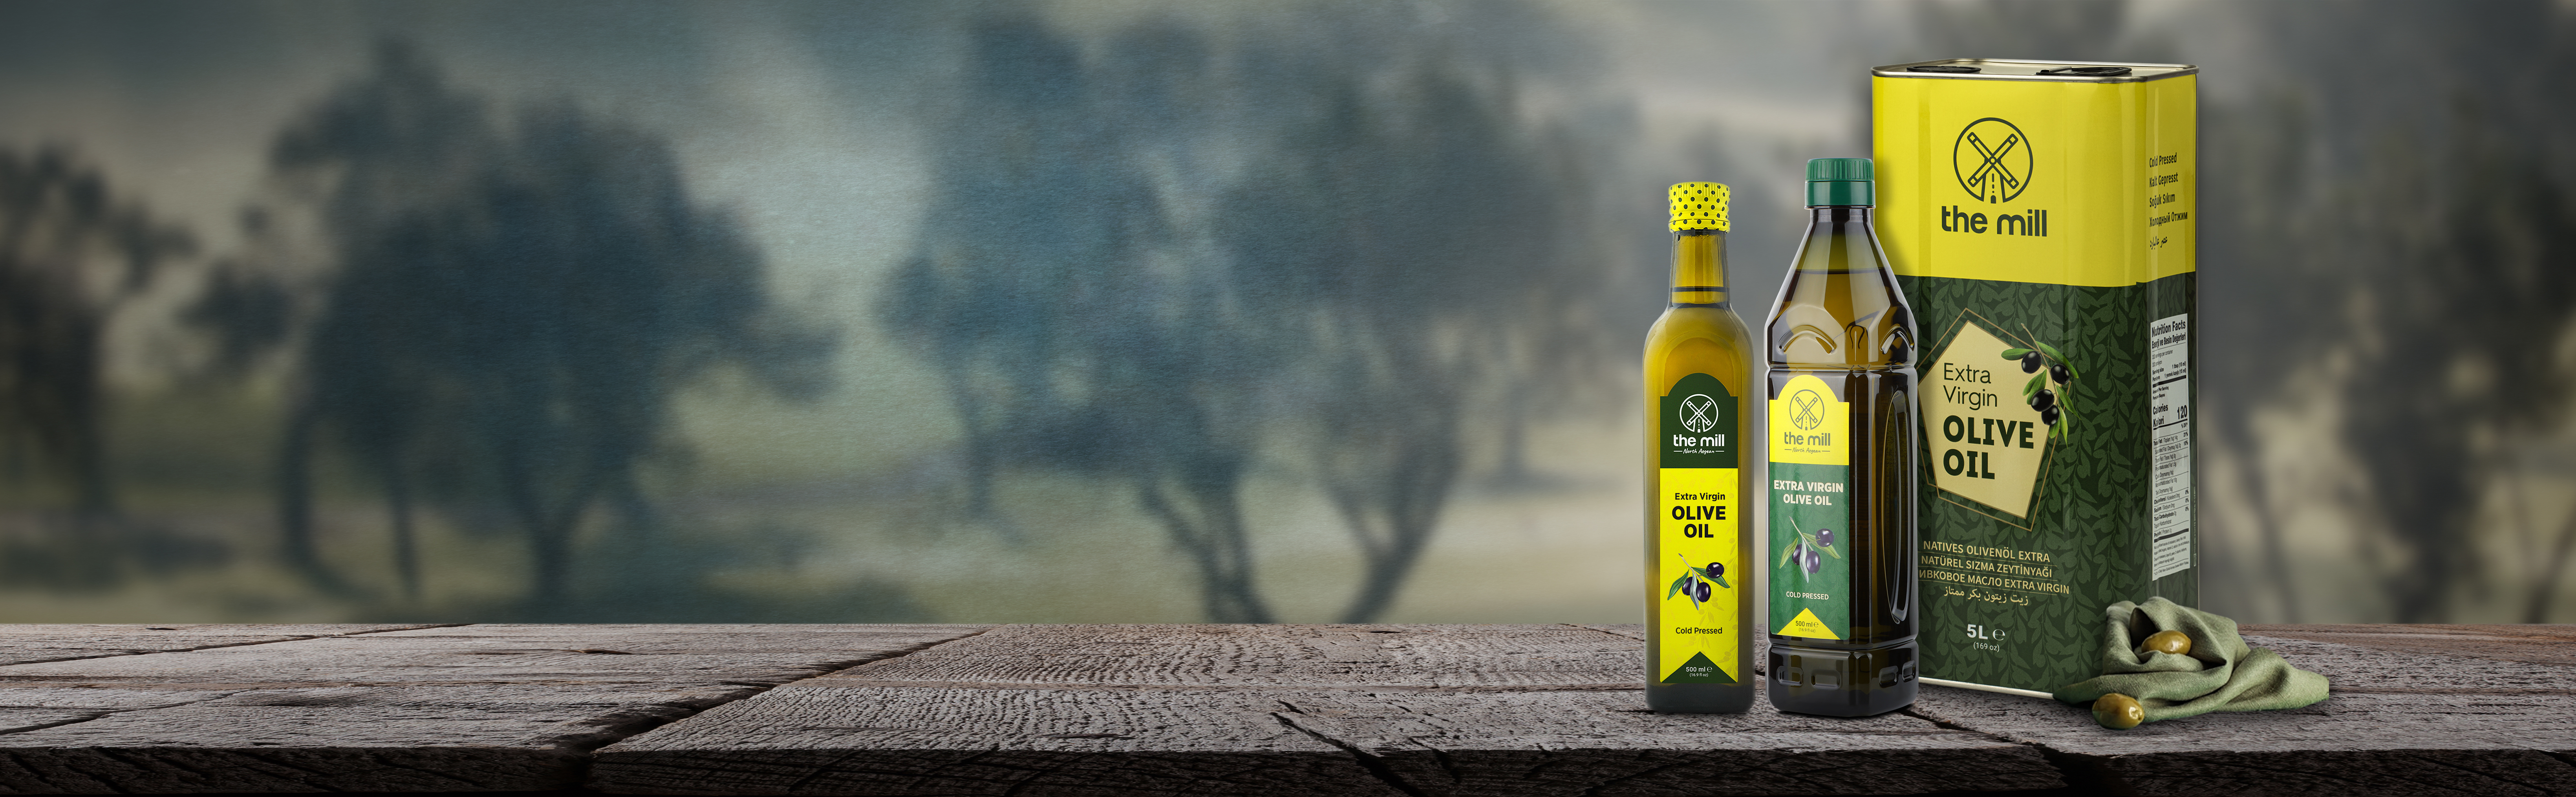 The Mill Extra Virgin Olive Oil Banner (1).jpg (6.69 MB)